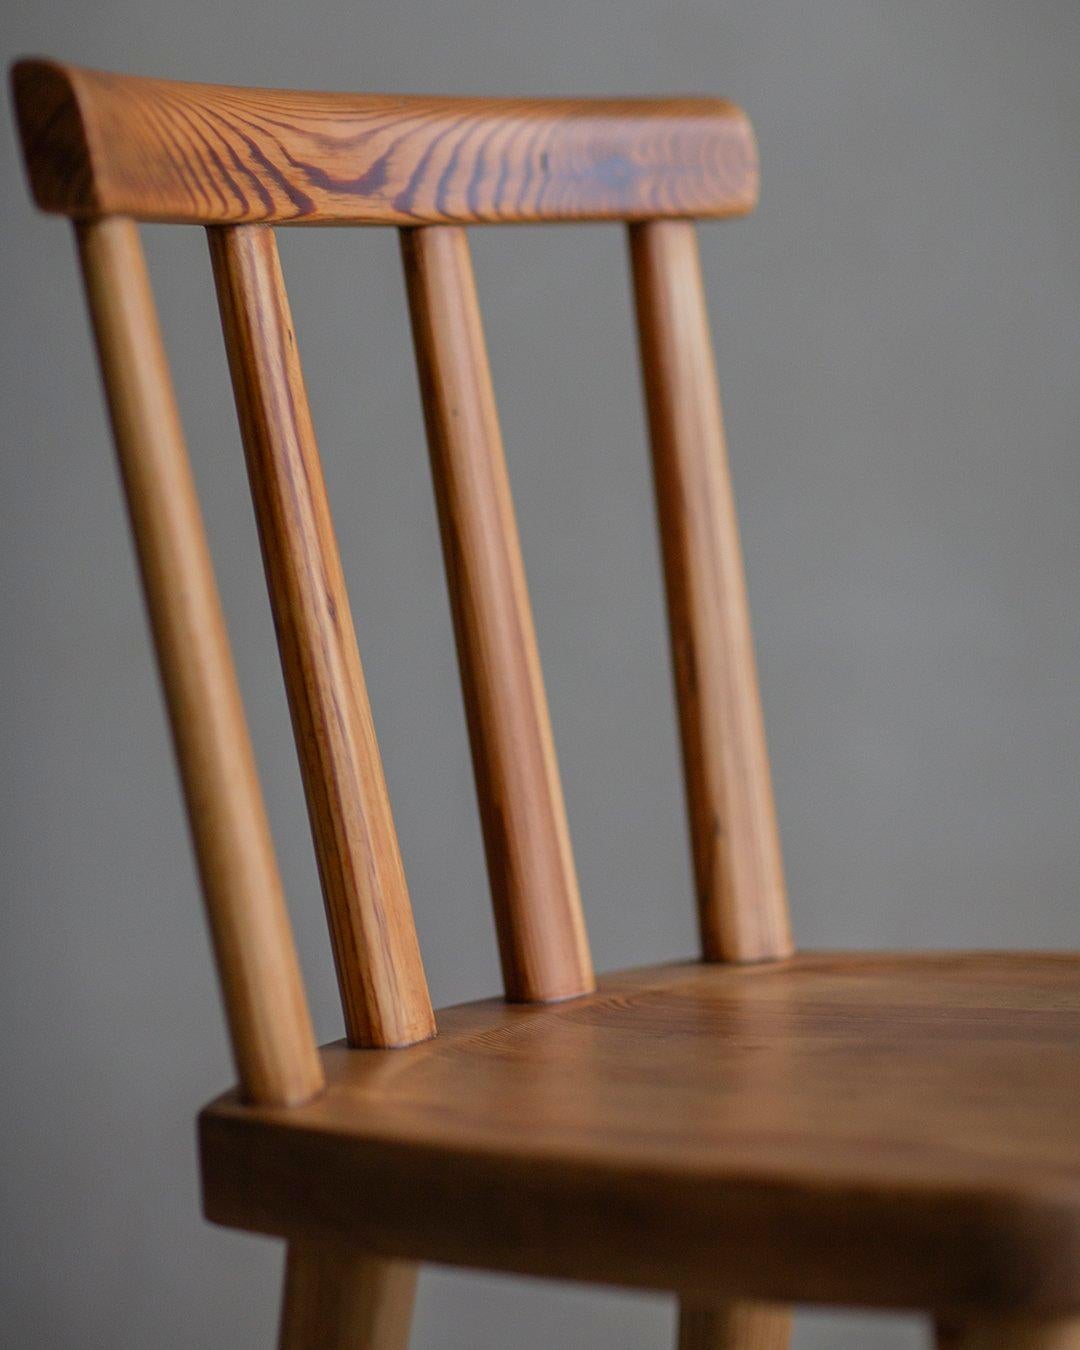 Axel Einar Hjorth - Utö Dining Chair - produced by Nordiska Kompaniet in Sweden For Sale 1